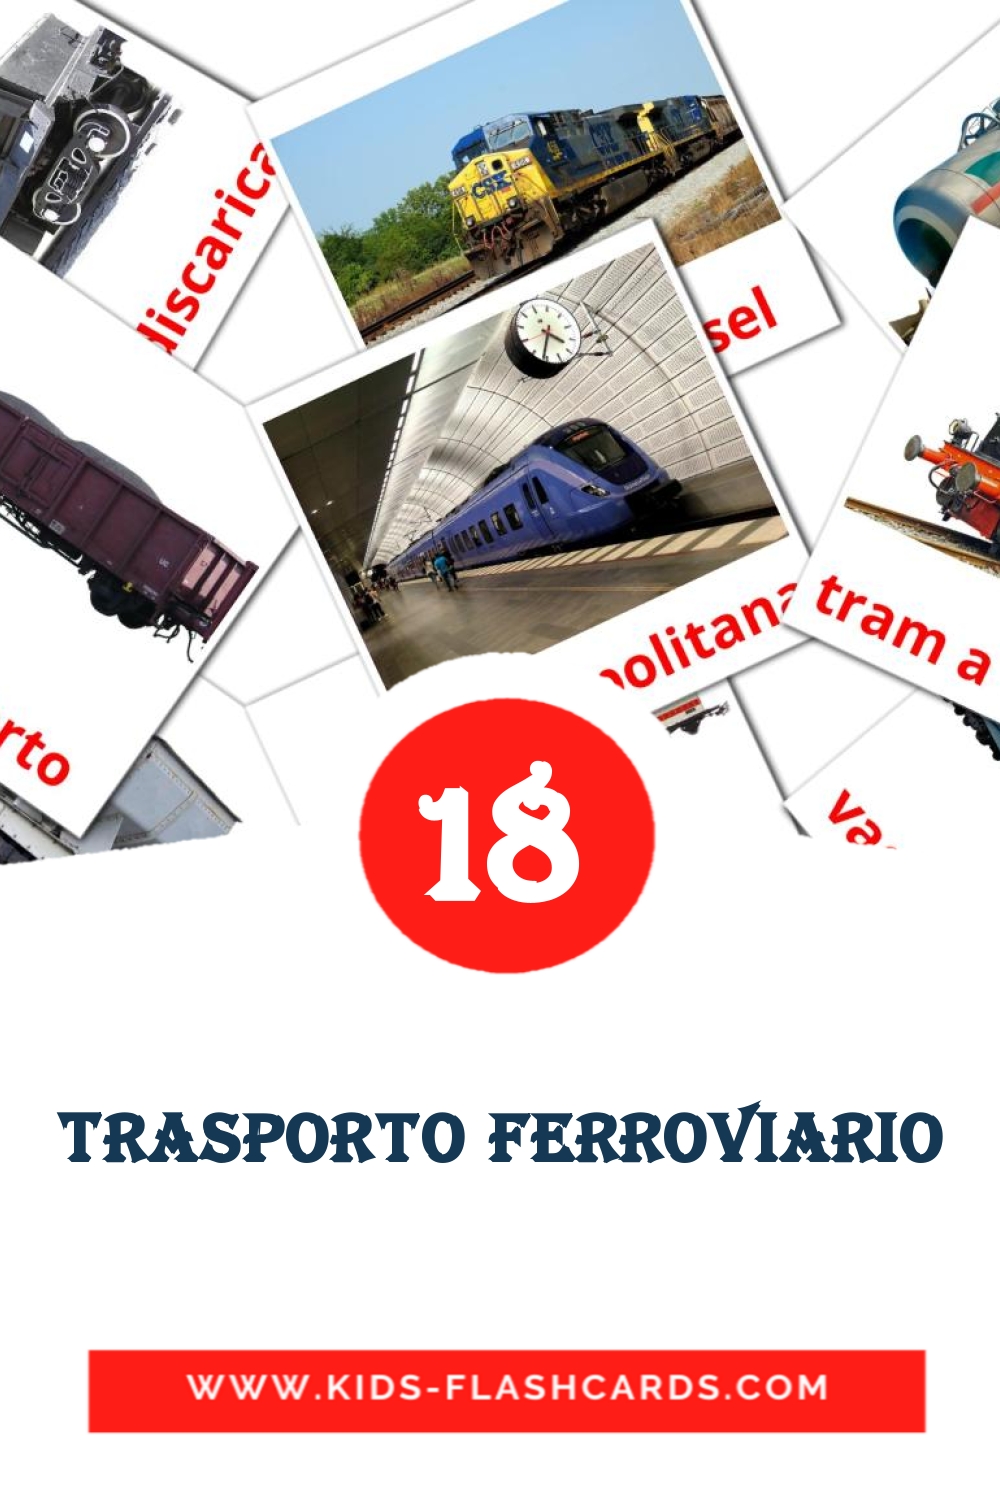 18 cartes illustrées de Trasporto ferroviario pour la maternelle en italien